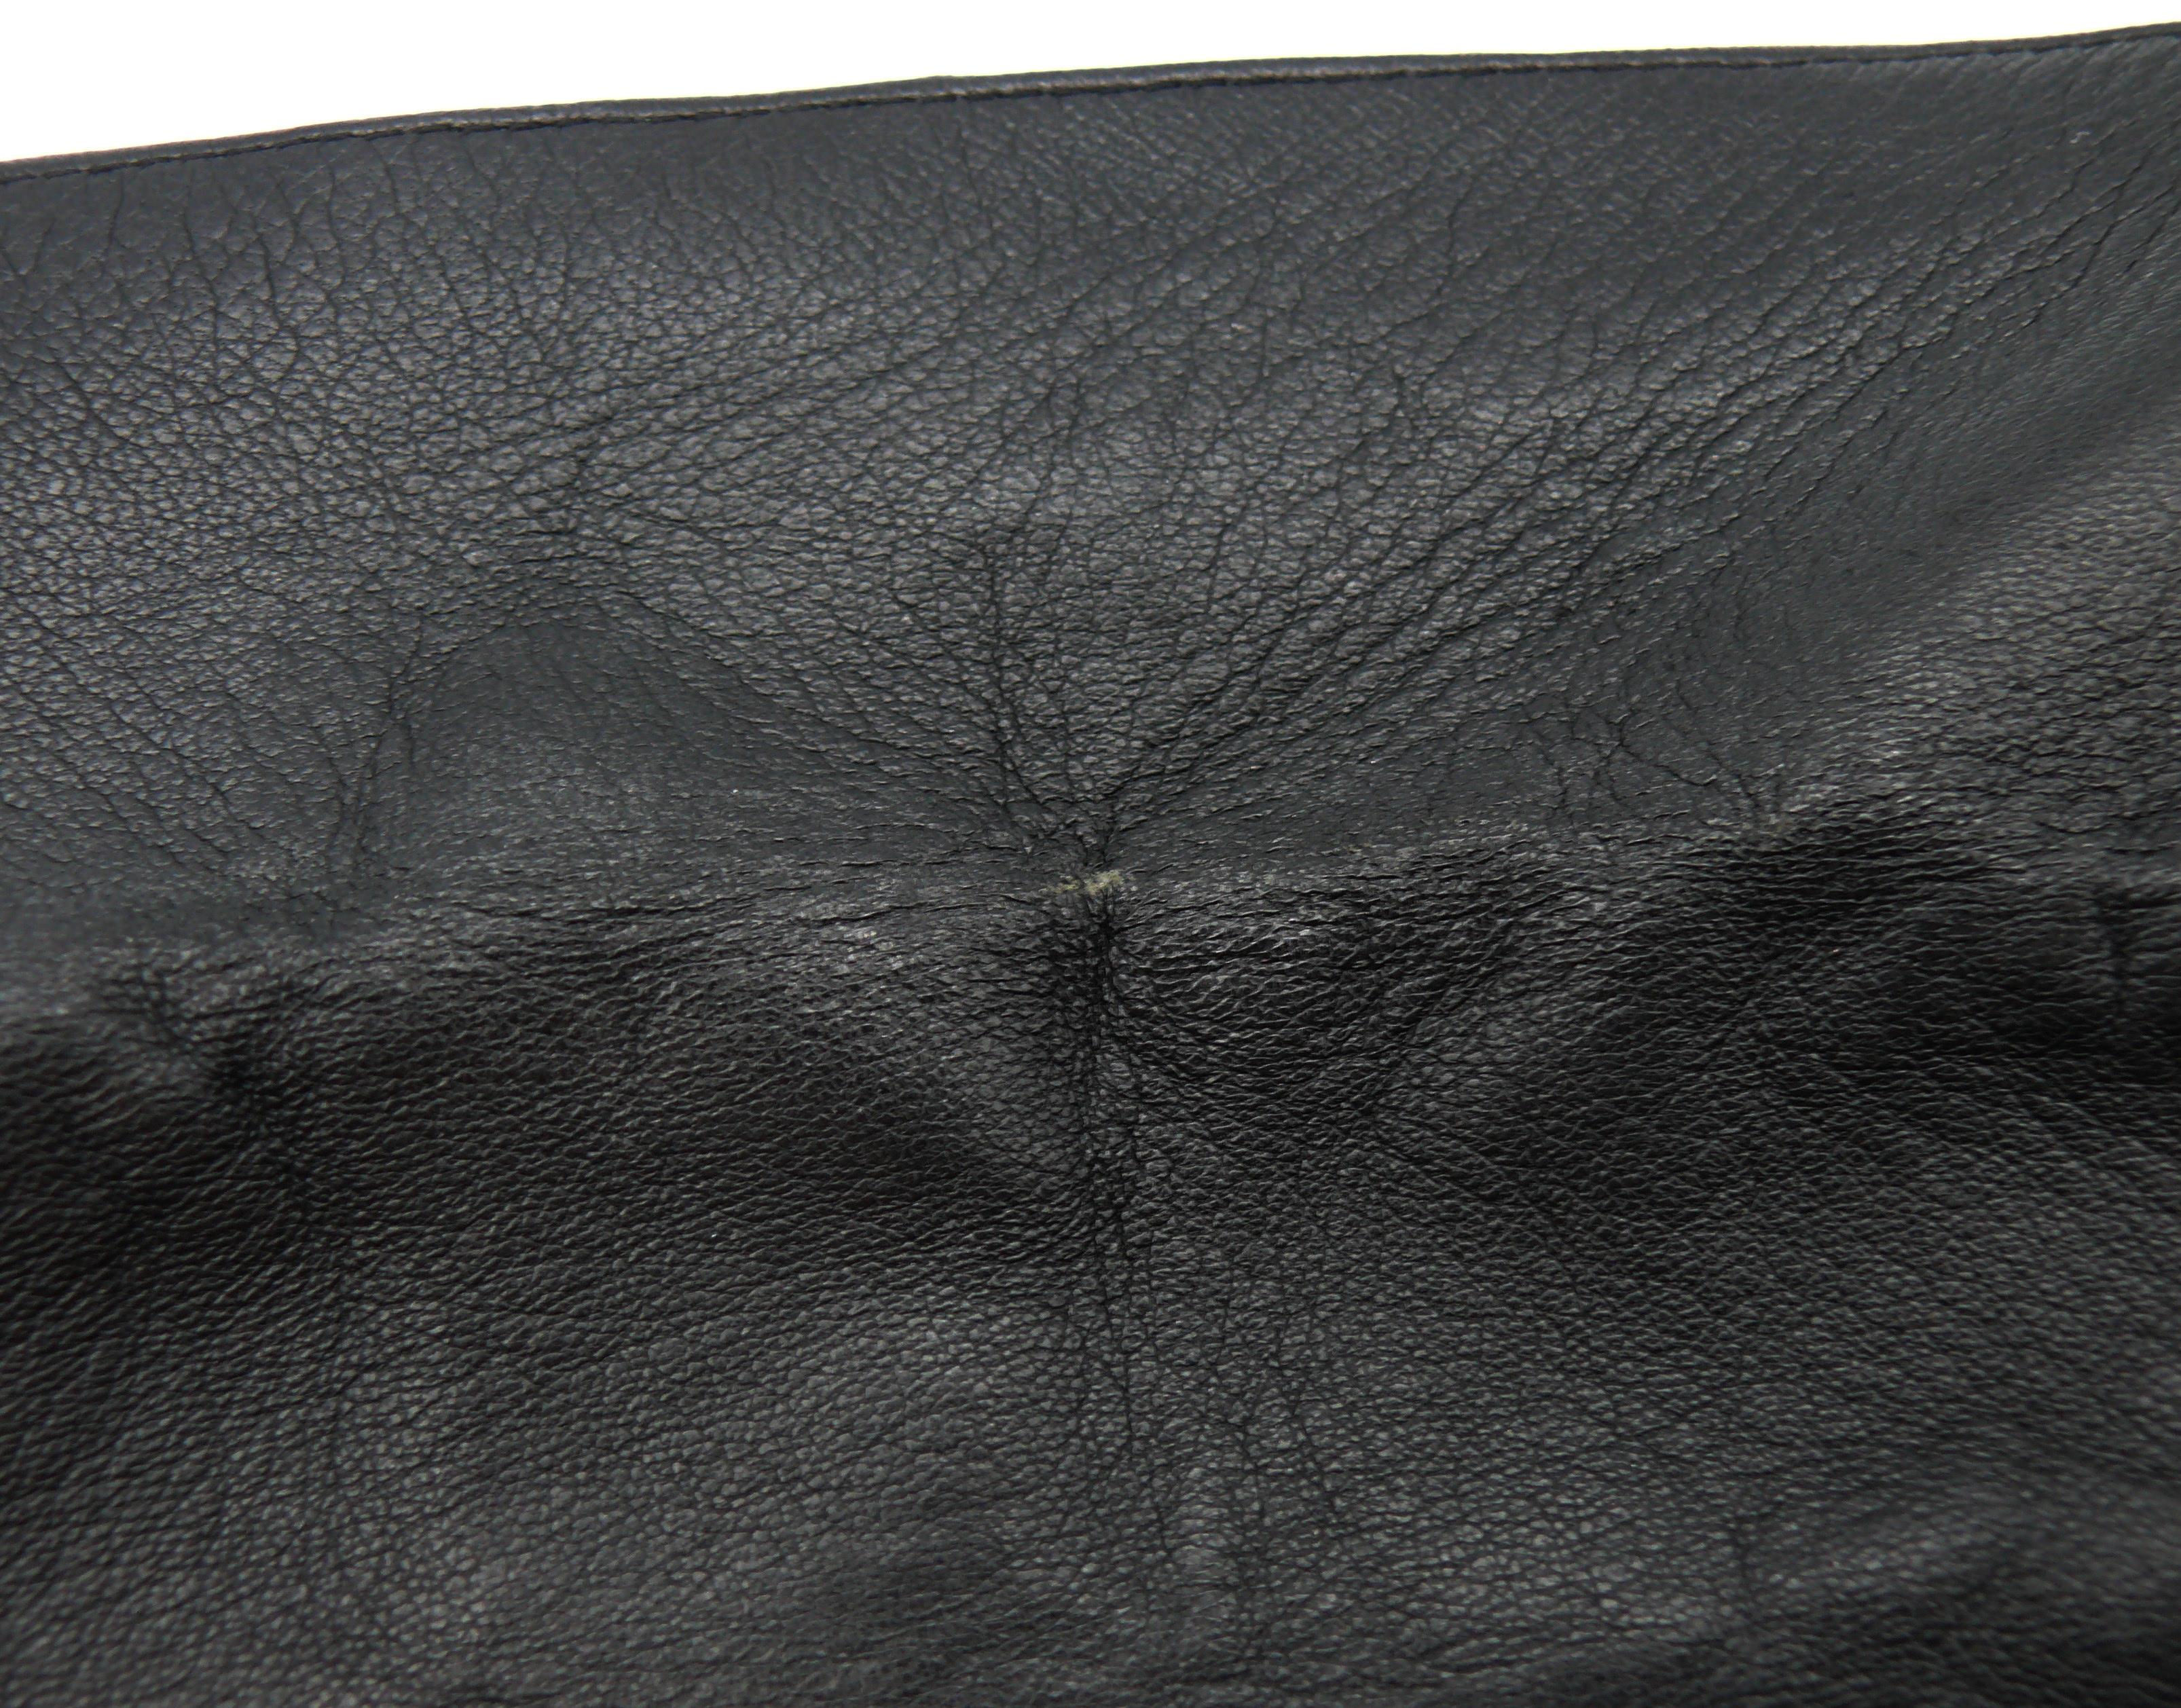 THIERRY MUGLER Vintage Black Leather Dress For Sale 11